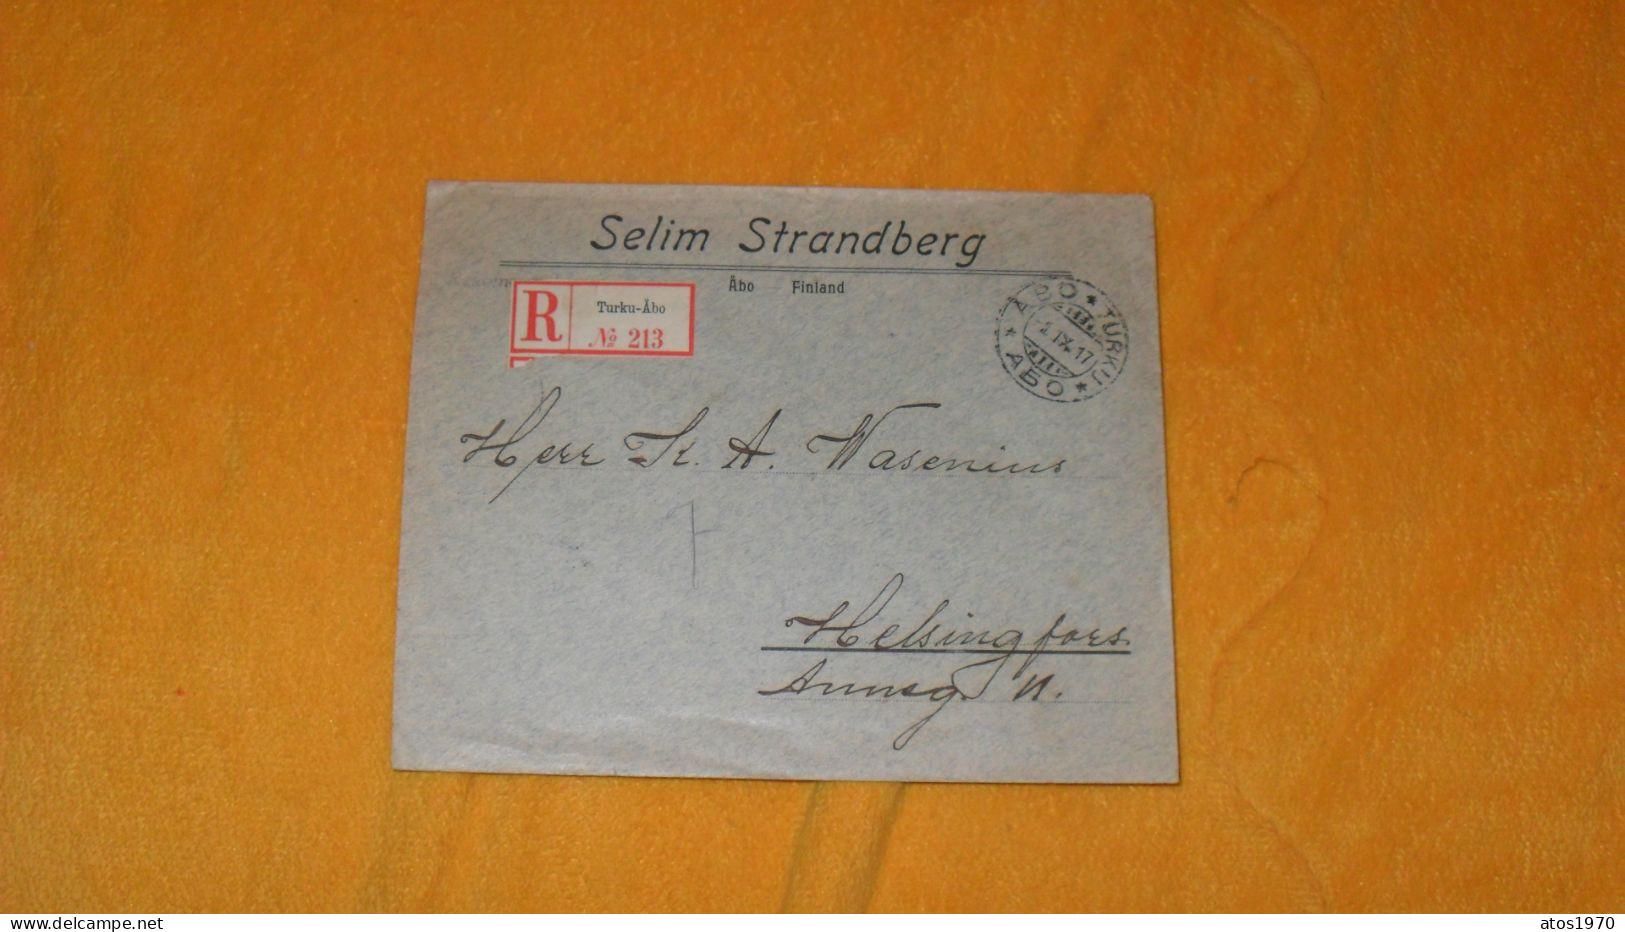 ENVELOPPE ANCIENNE DE 1917../ SELIM STRANDBERG ABO FINLAND..RECOMMANDE TURKU ABO N°213 POUR HELSINKI ?..+ TIMBRES X 25 - Lettres & Documents